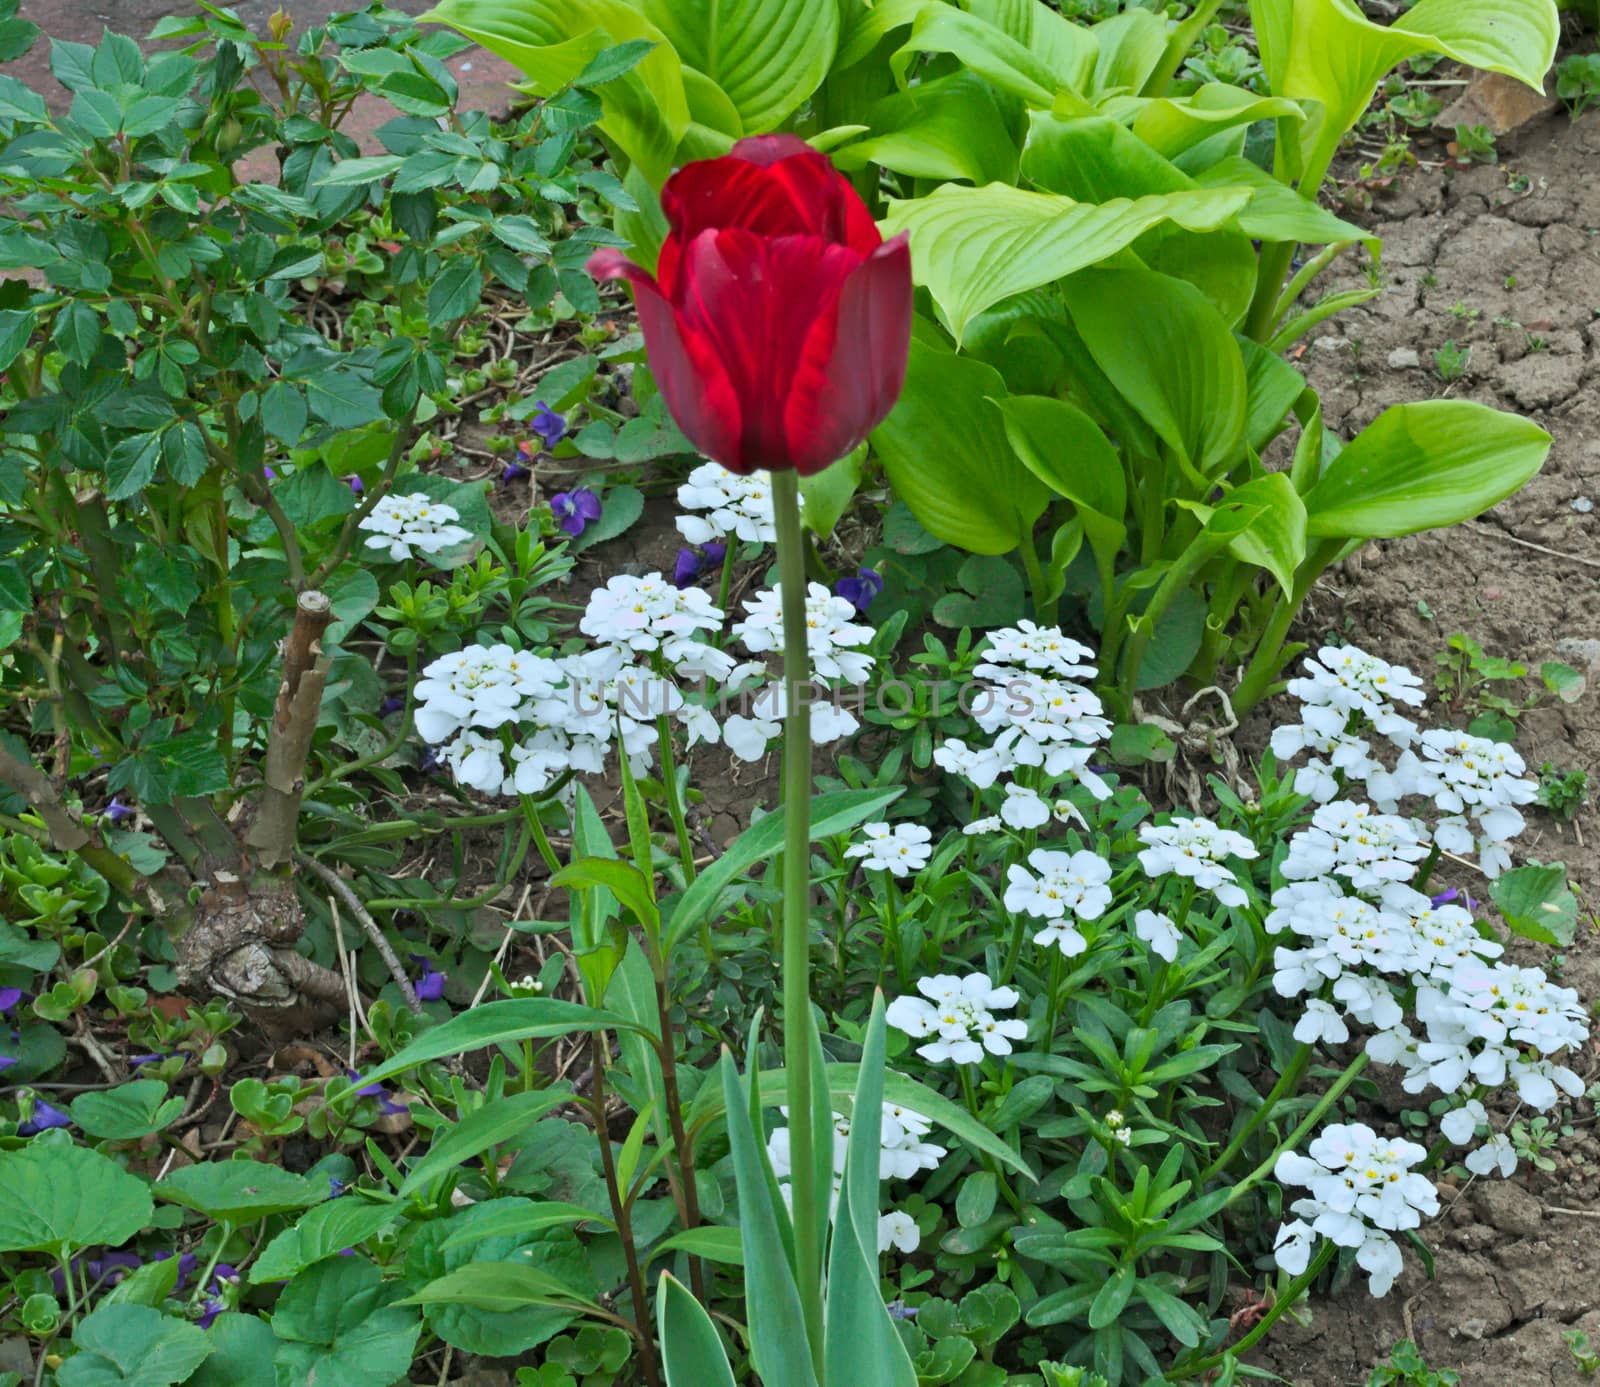 Red tulip blooming in garden by sheriffkule